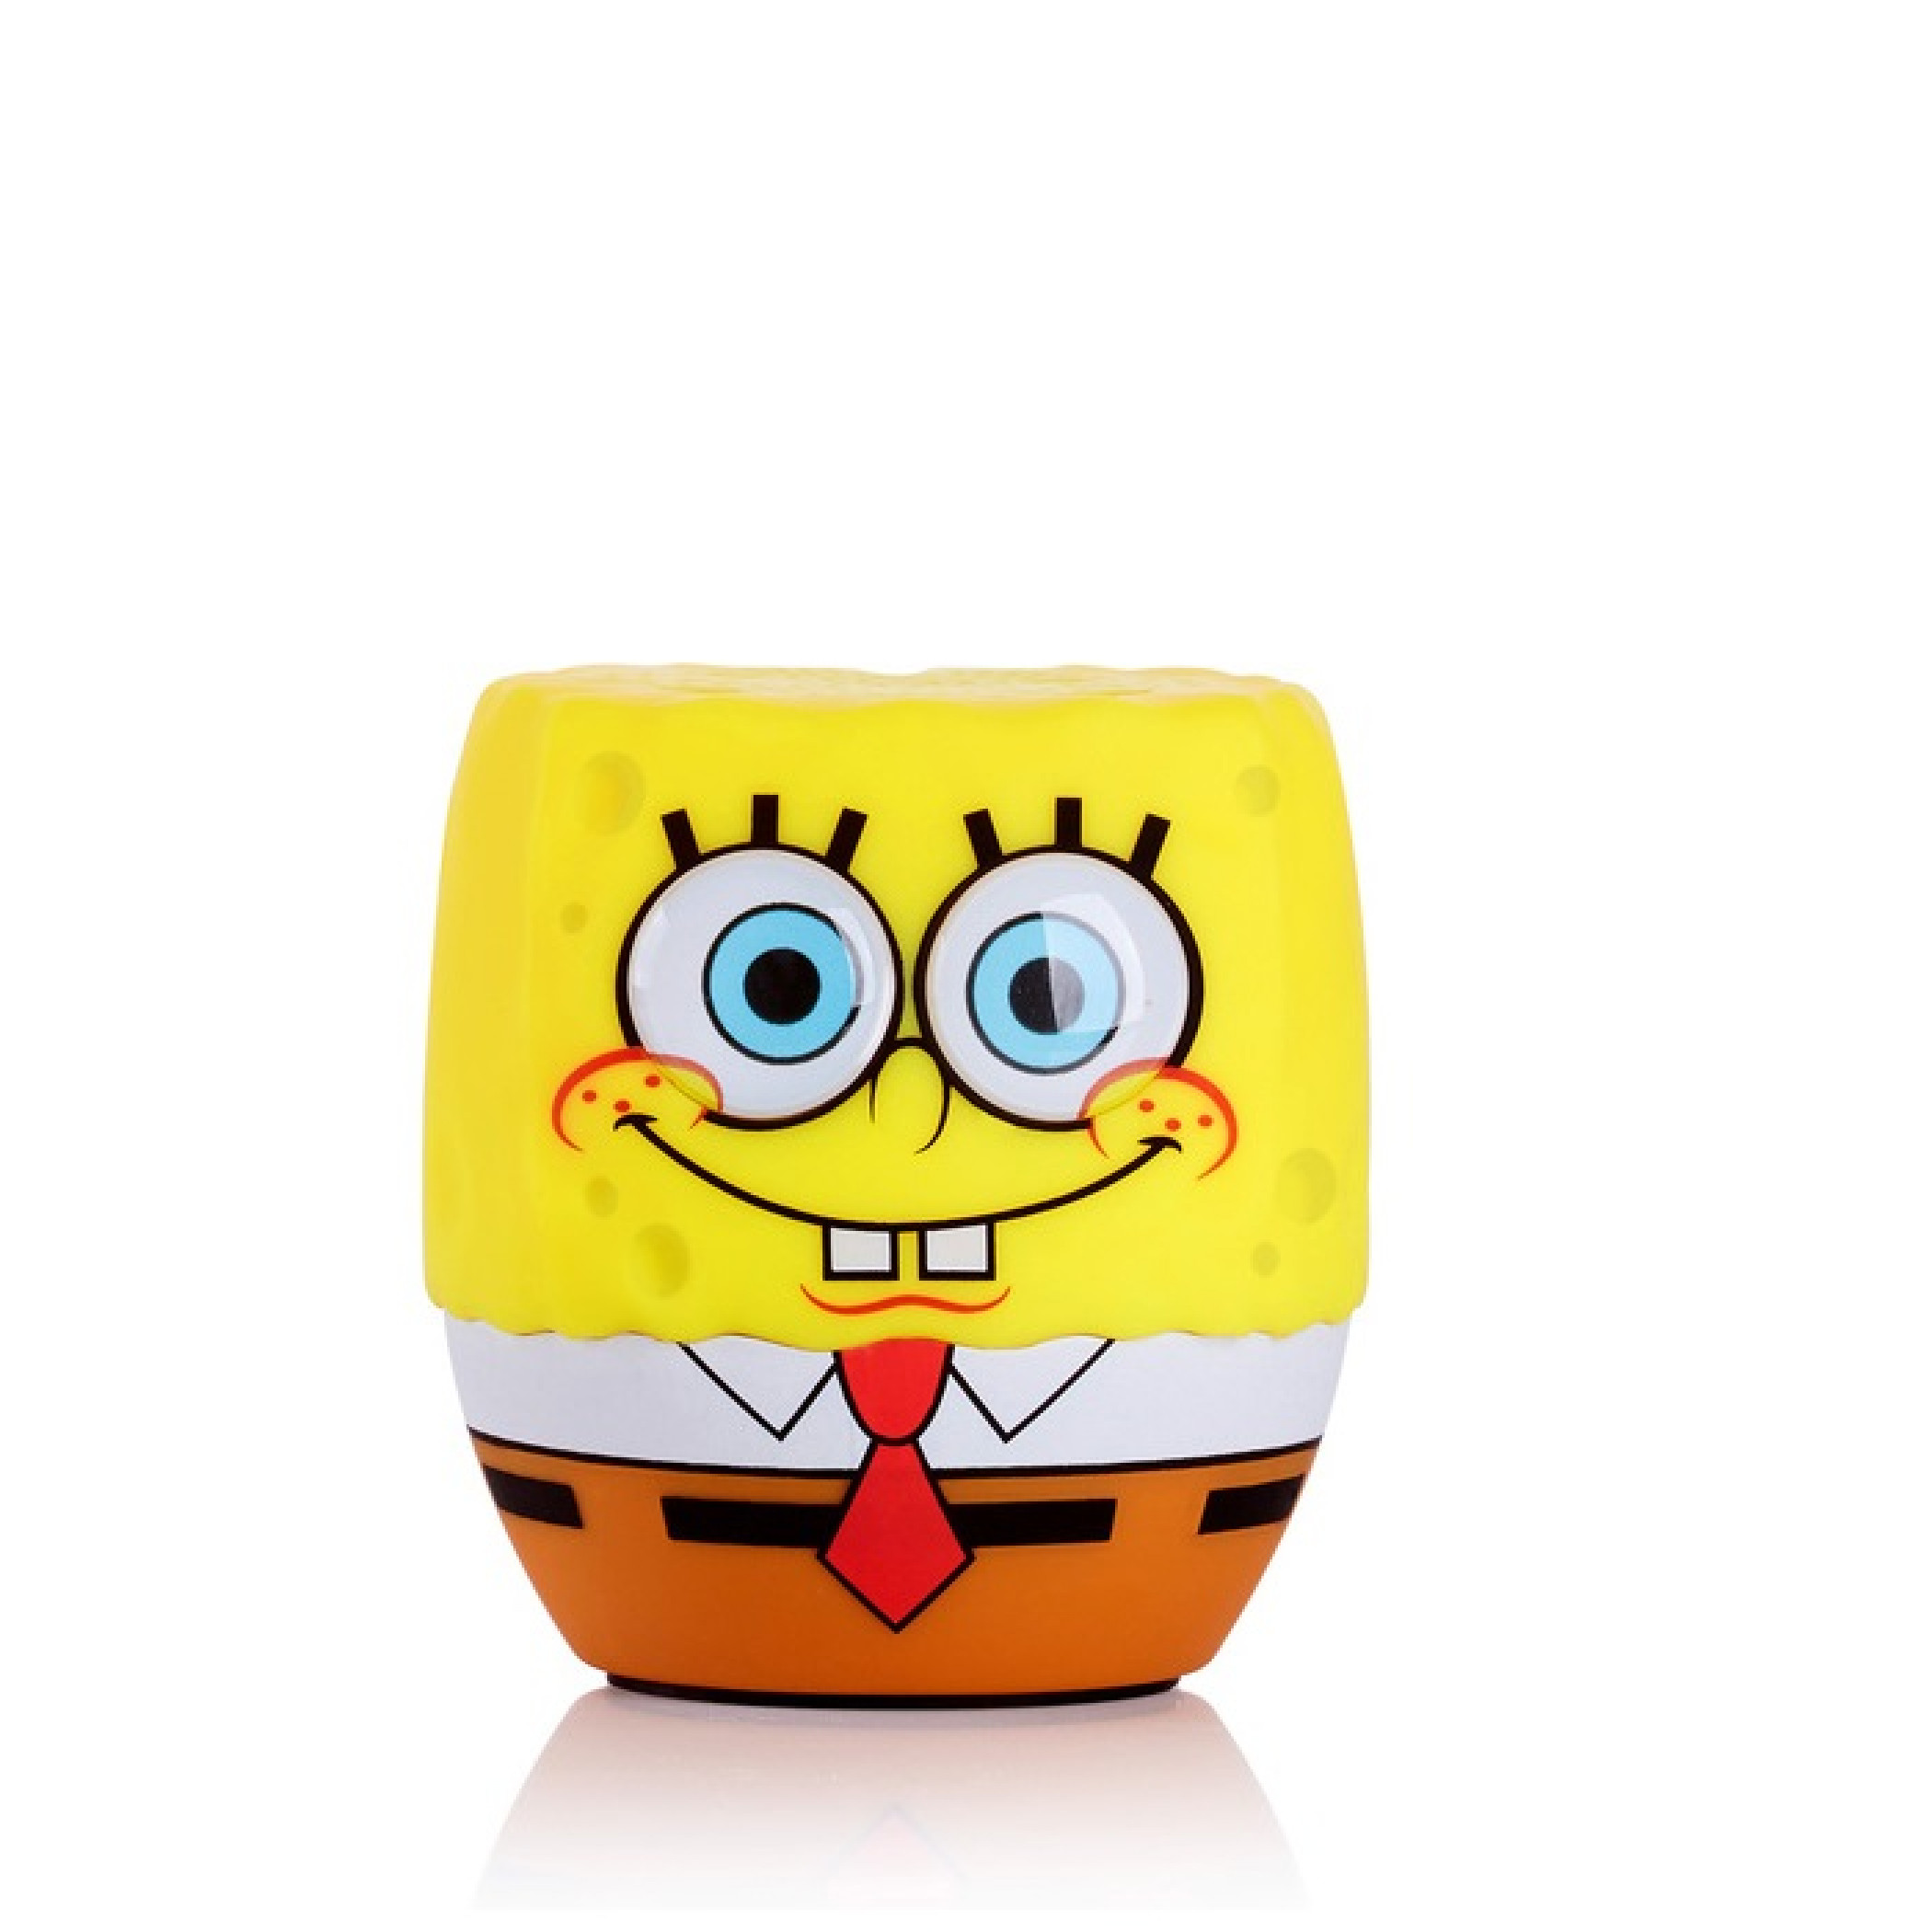 SpongeBob SquarePants Bitty Bombers Bluetooth Speaker